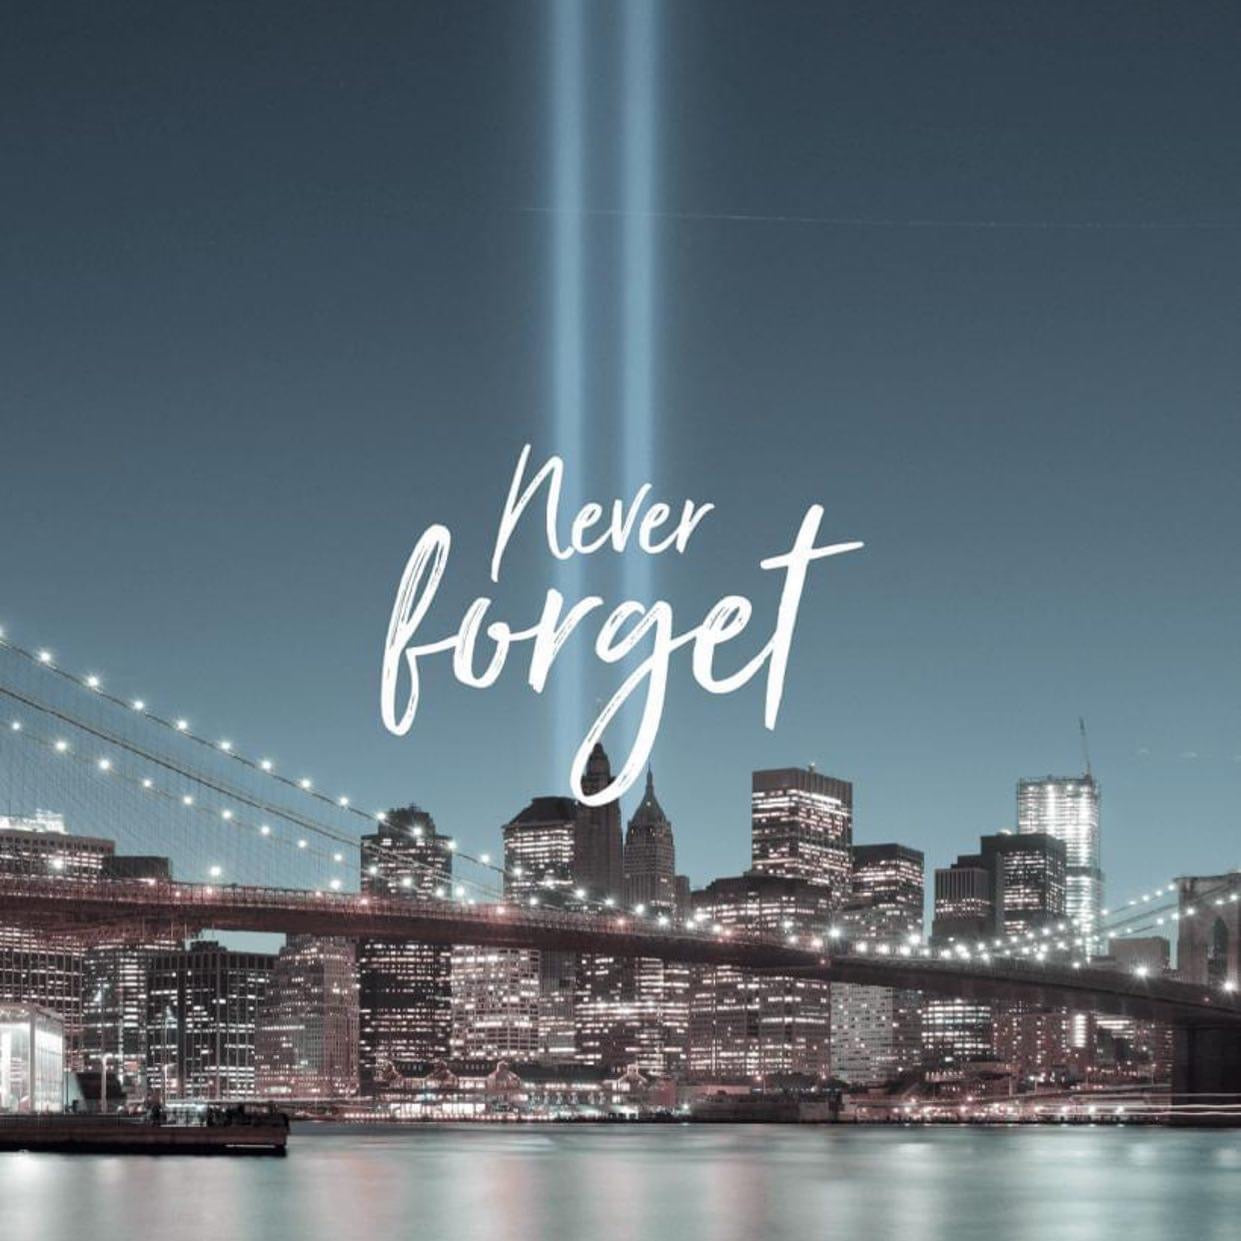 Always Remember 9/11